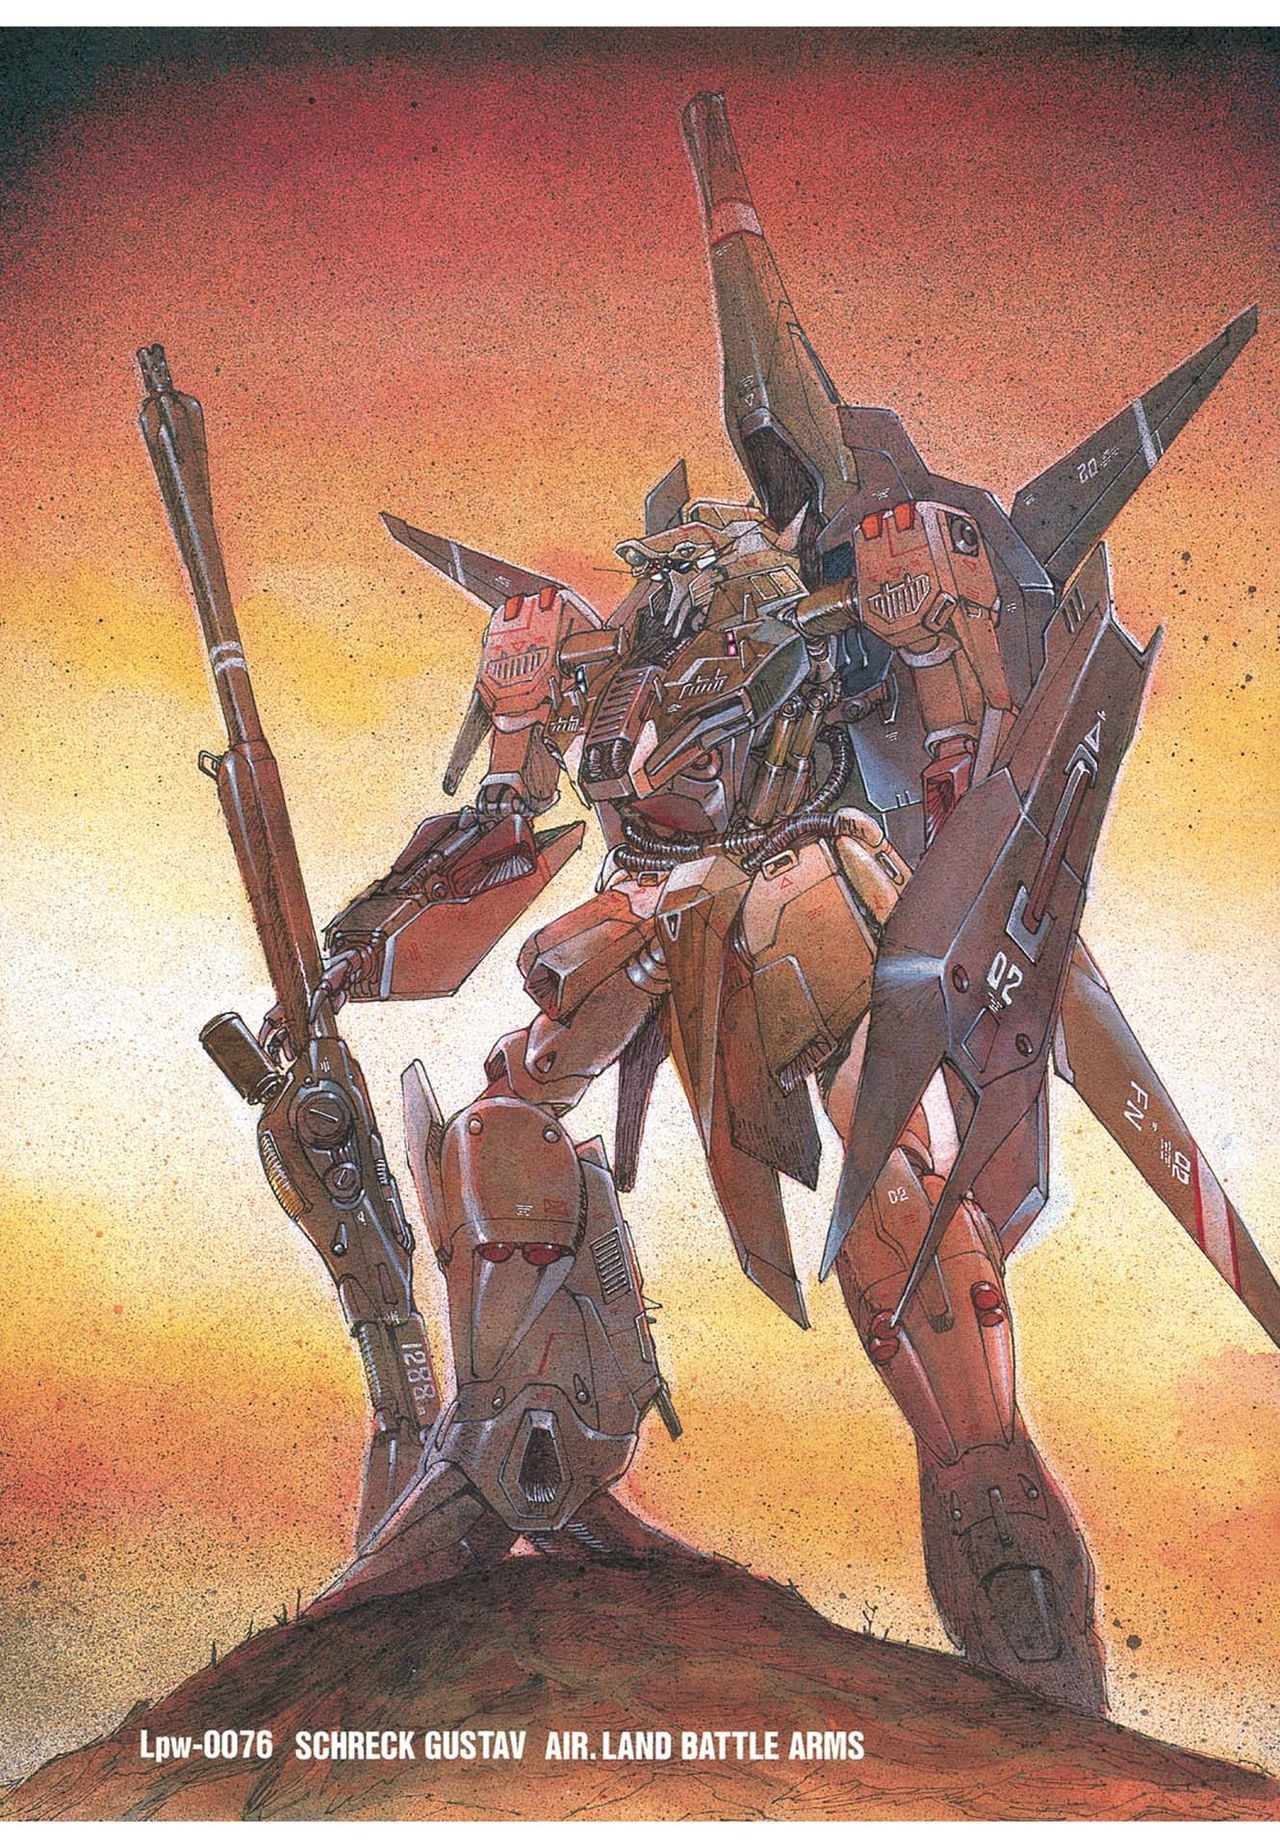 [Kazuhisa Kondo] Kazuhisa Kondo 2D & 3D Works - Go Ahead - From Mobile Suit Gundam to Original Mechanism 2